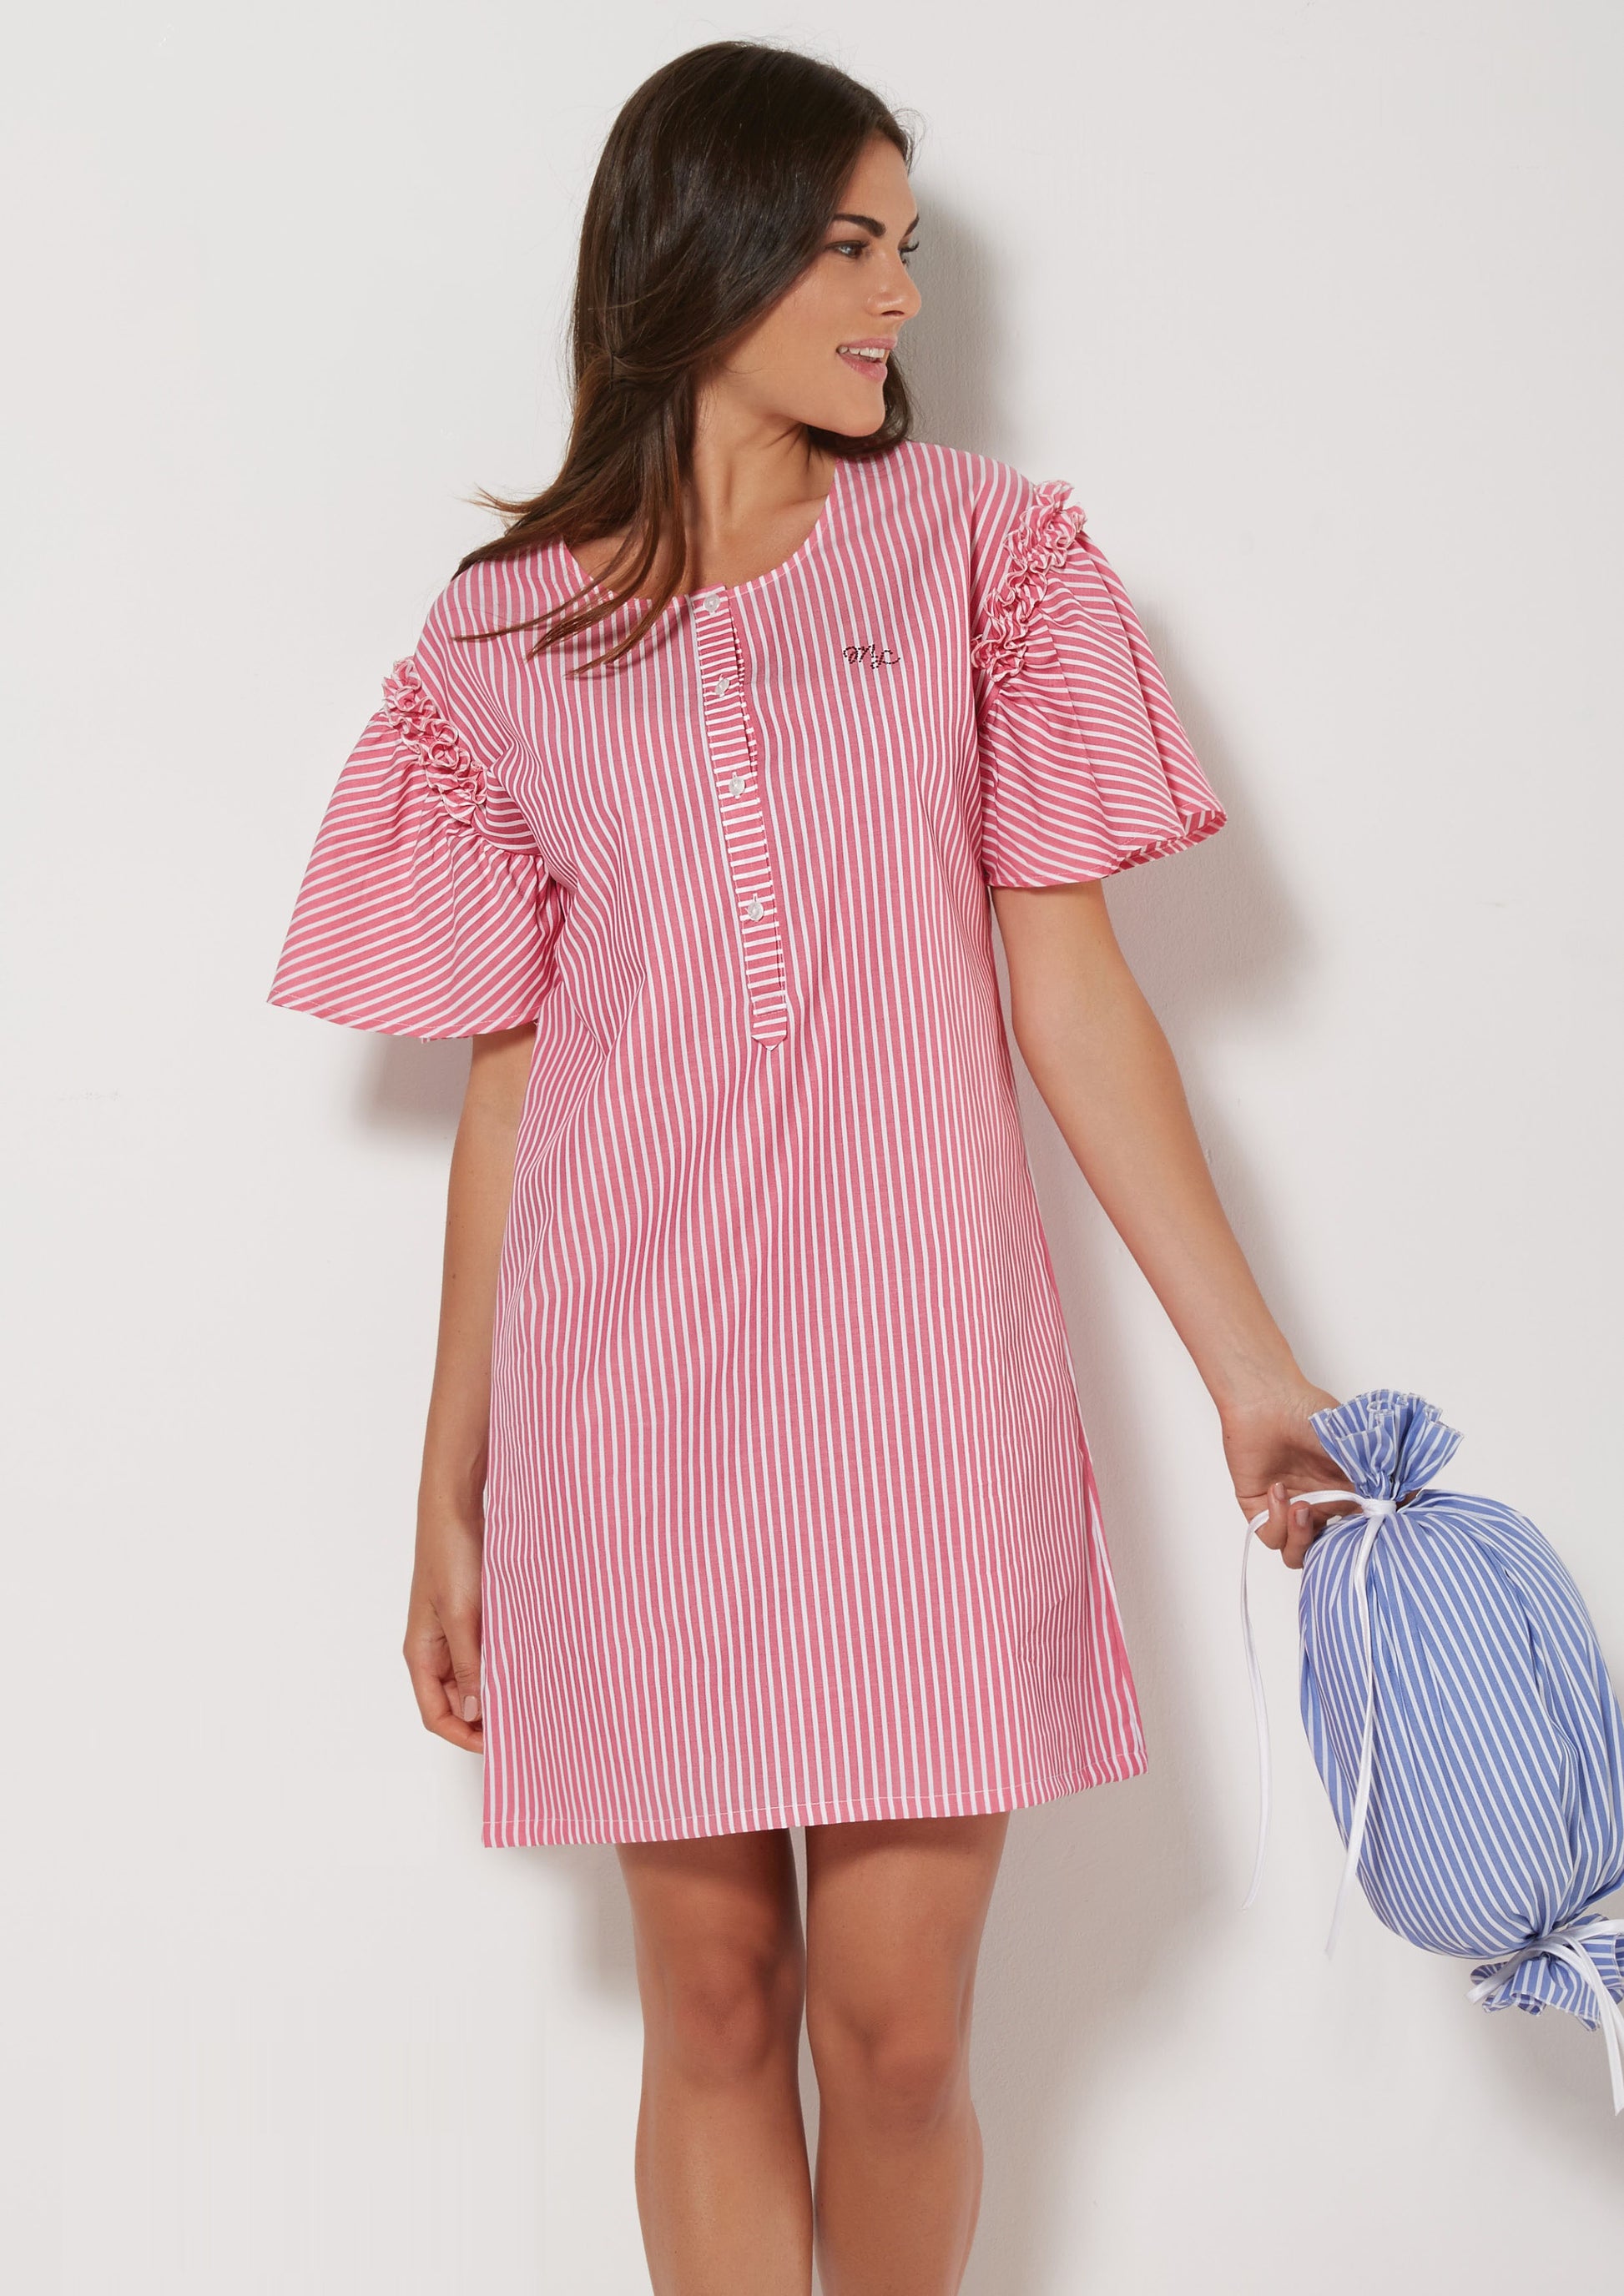 Stylish Striped Cotton Nightgown